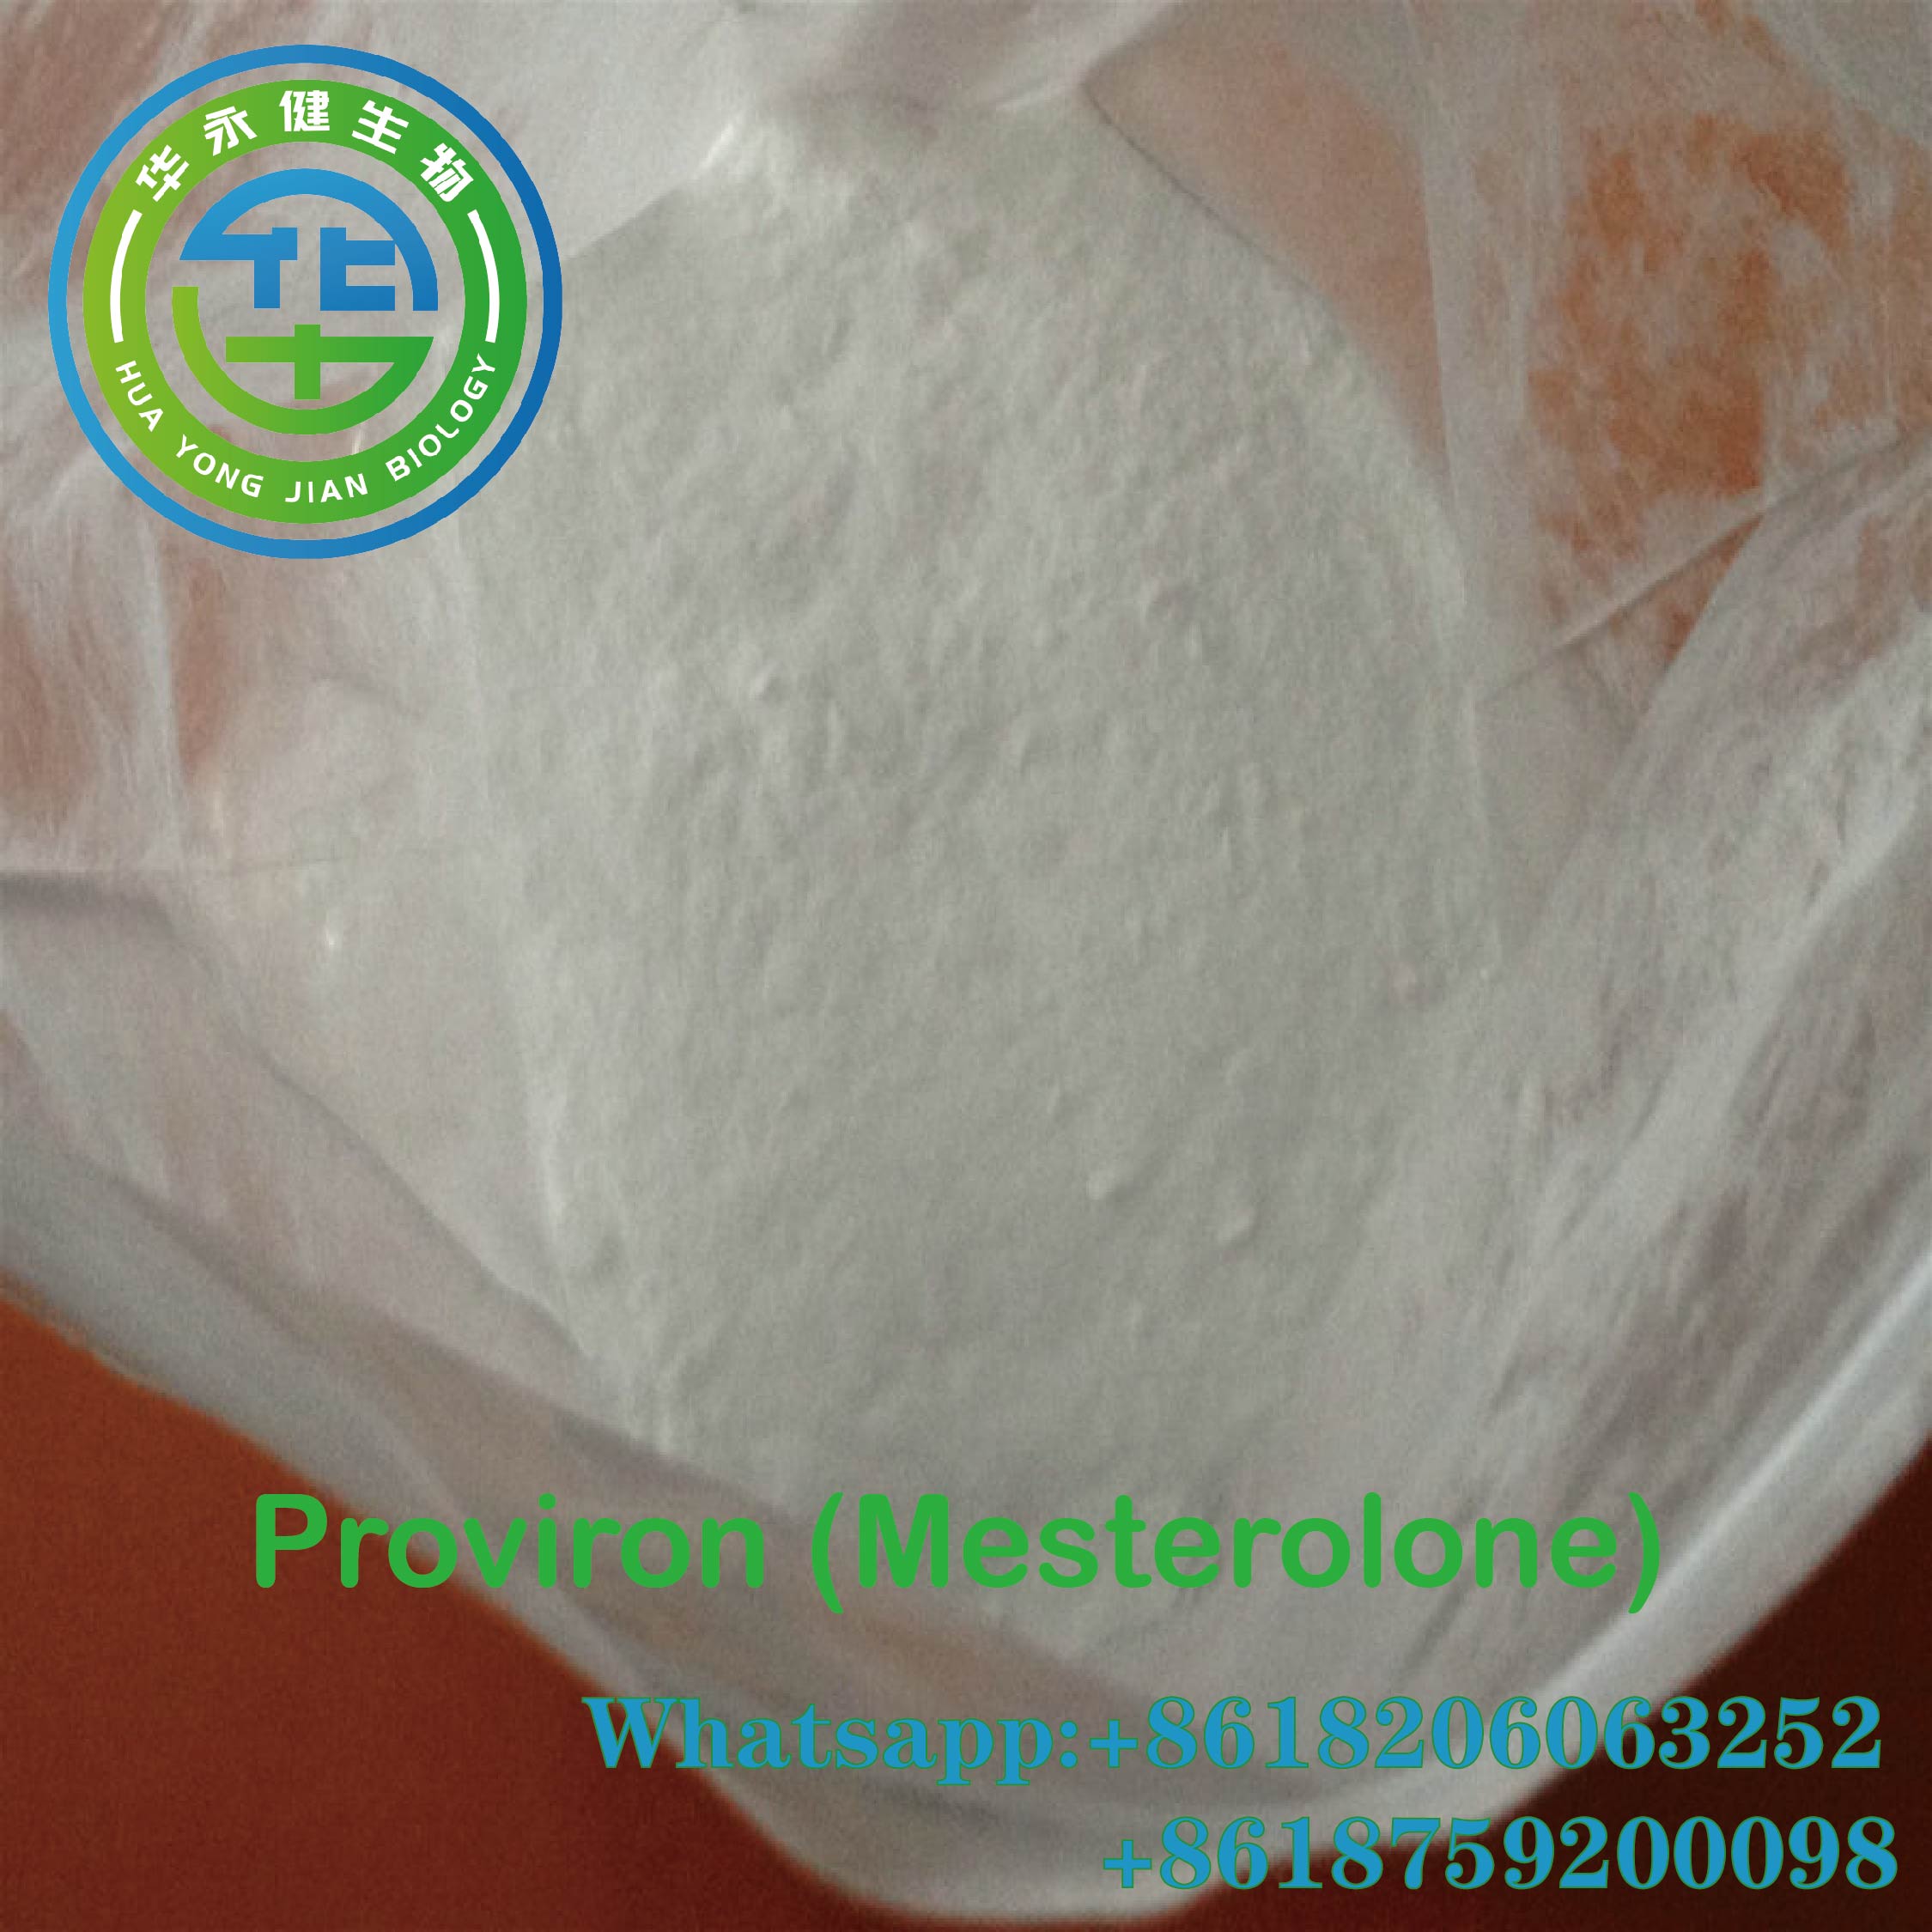 Proviron (Mesterolone)6